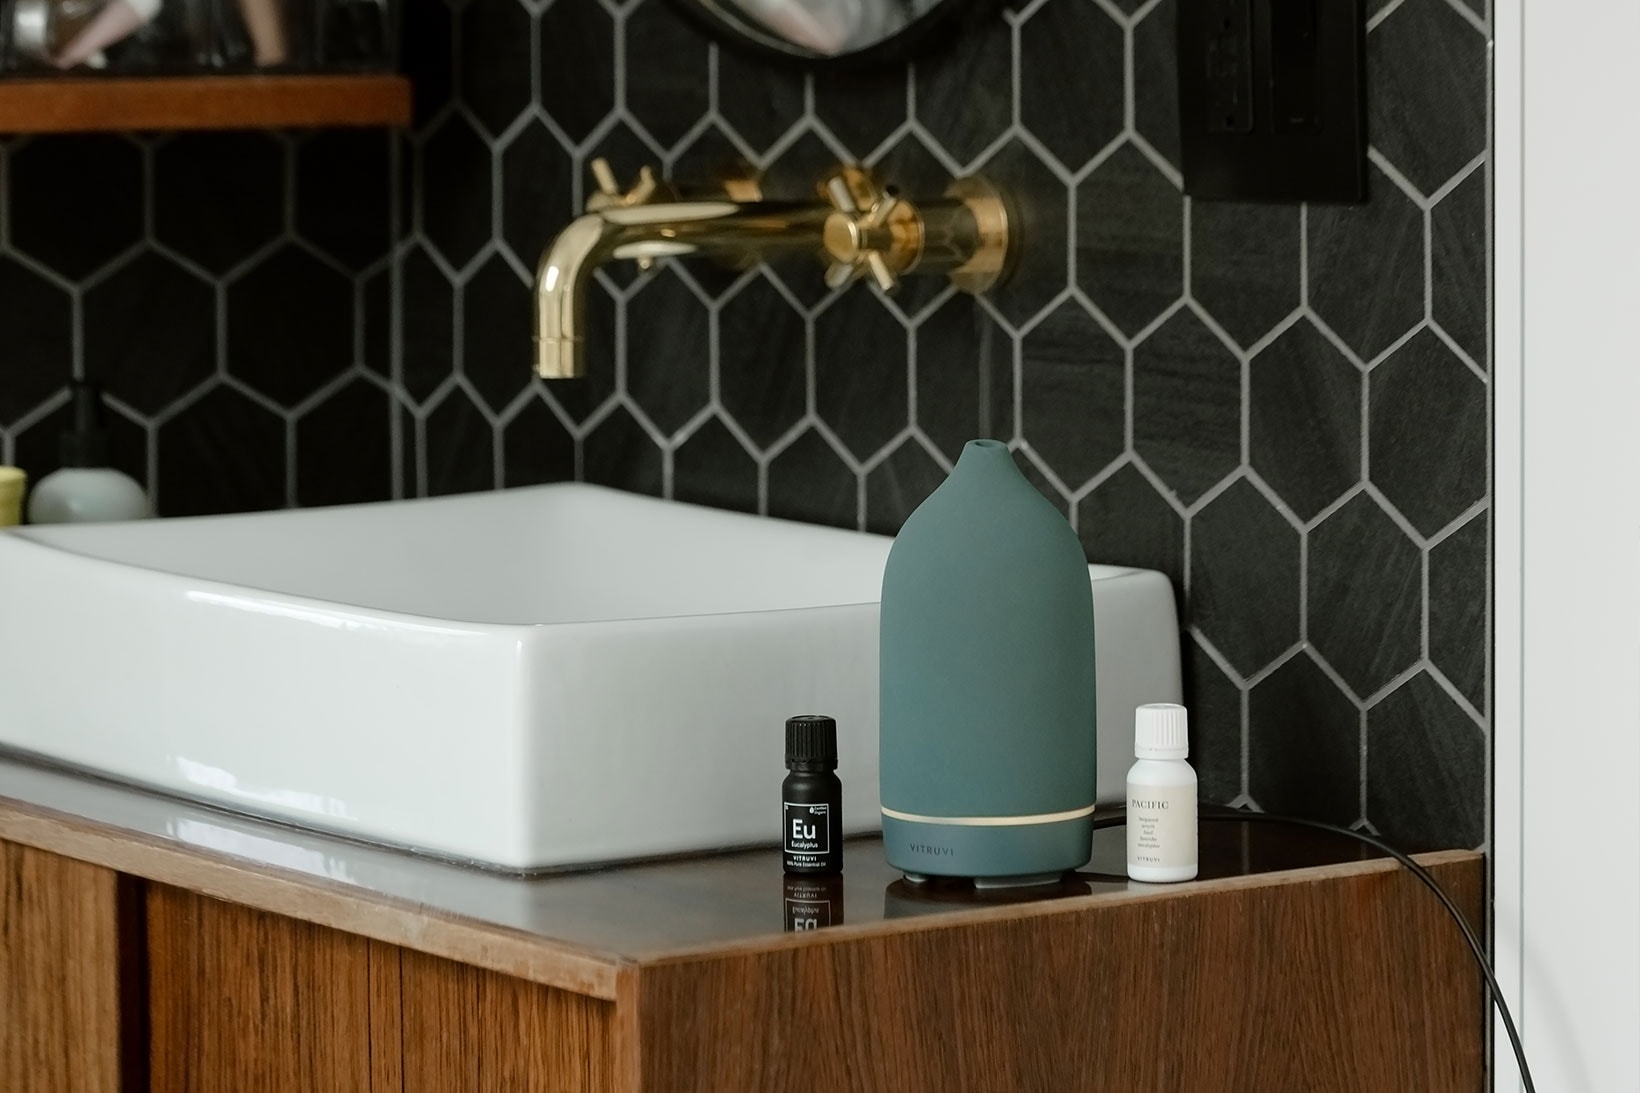 vitruvi stone diffusers essential oils sea teal green homeware decor bathroom sink